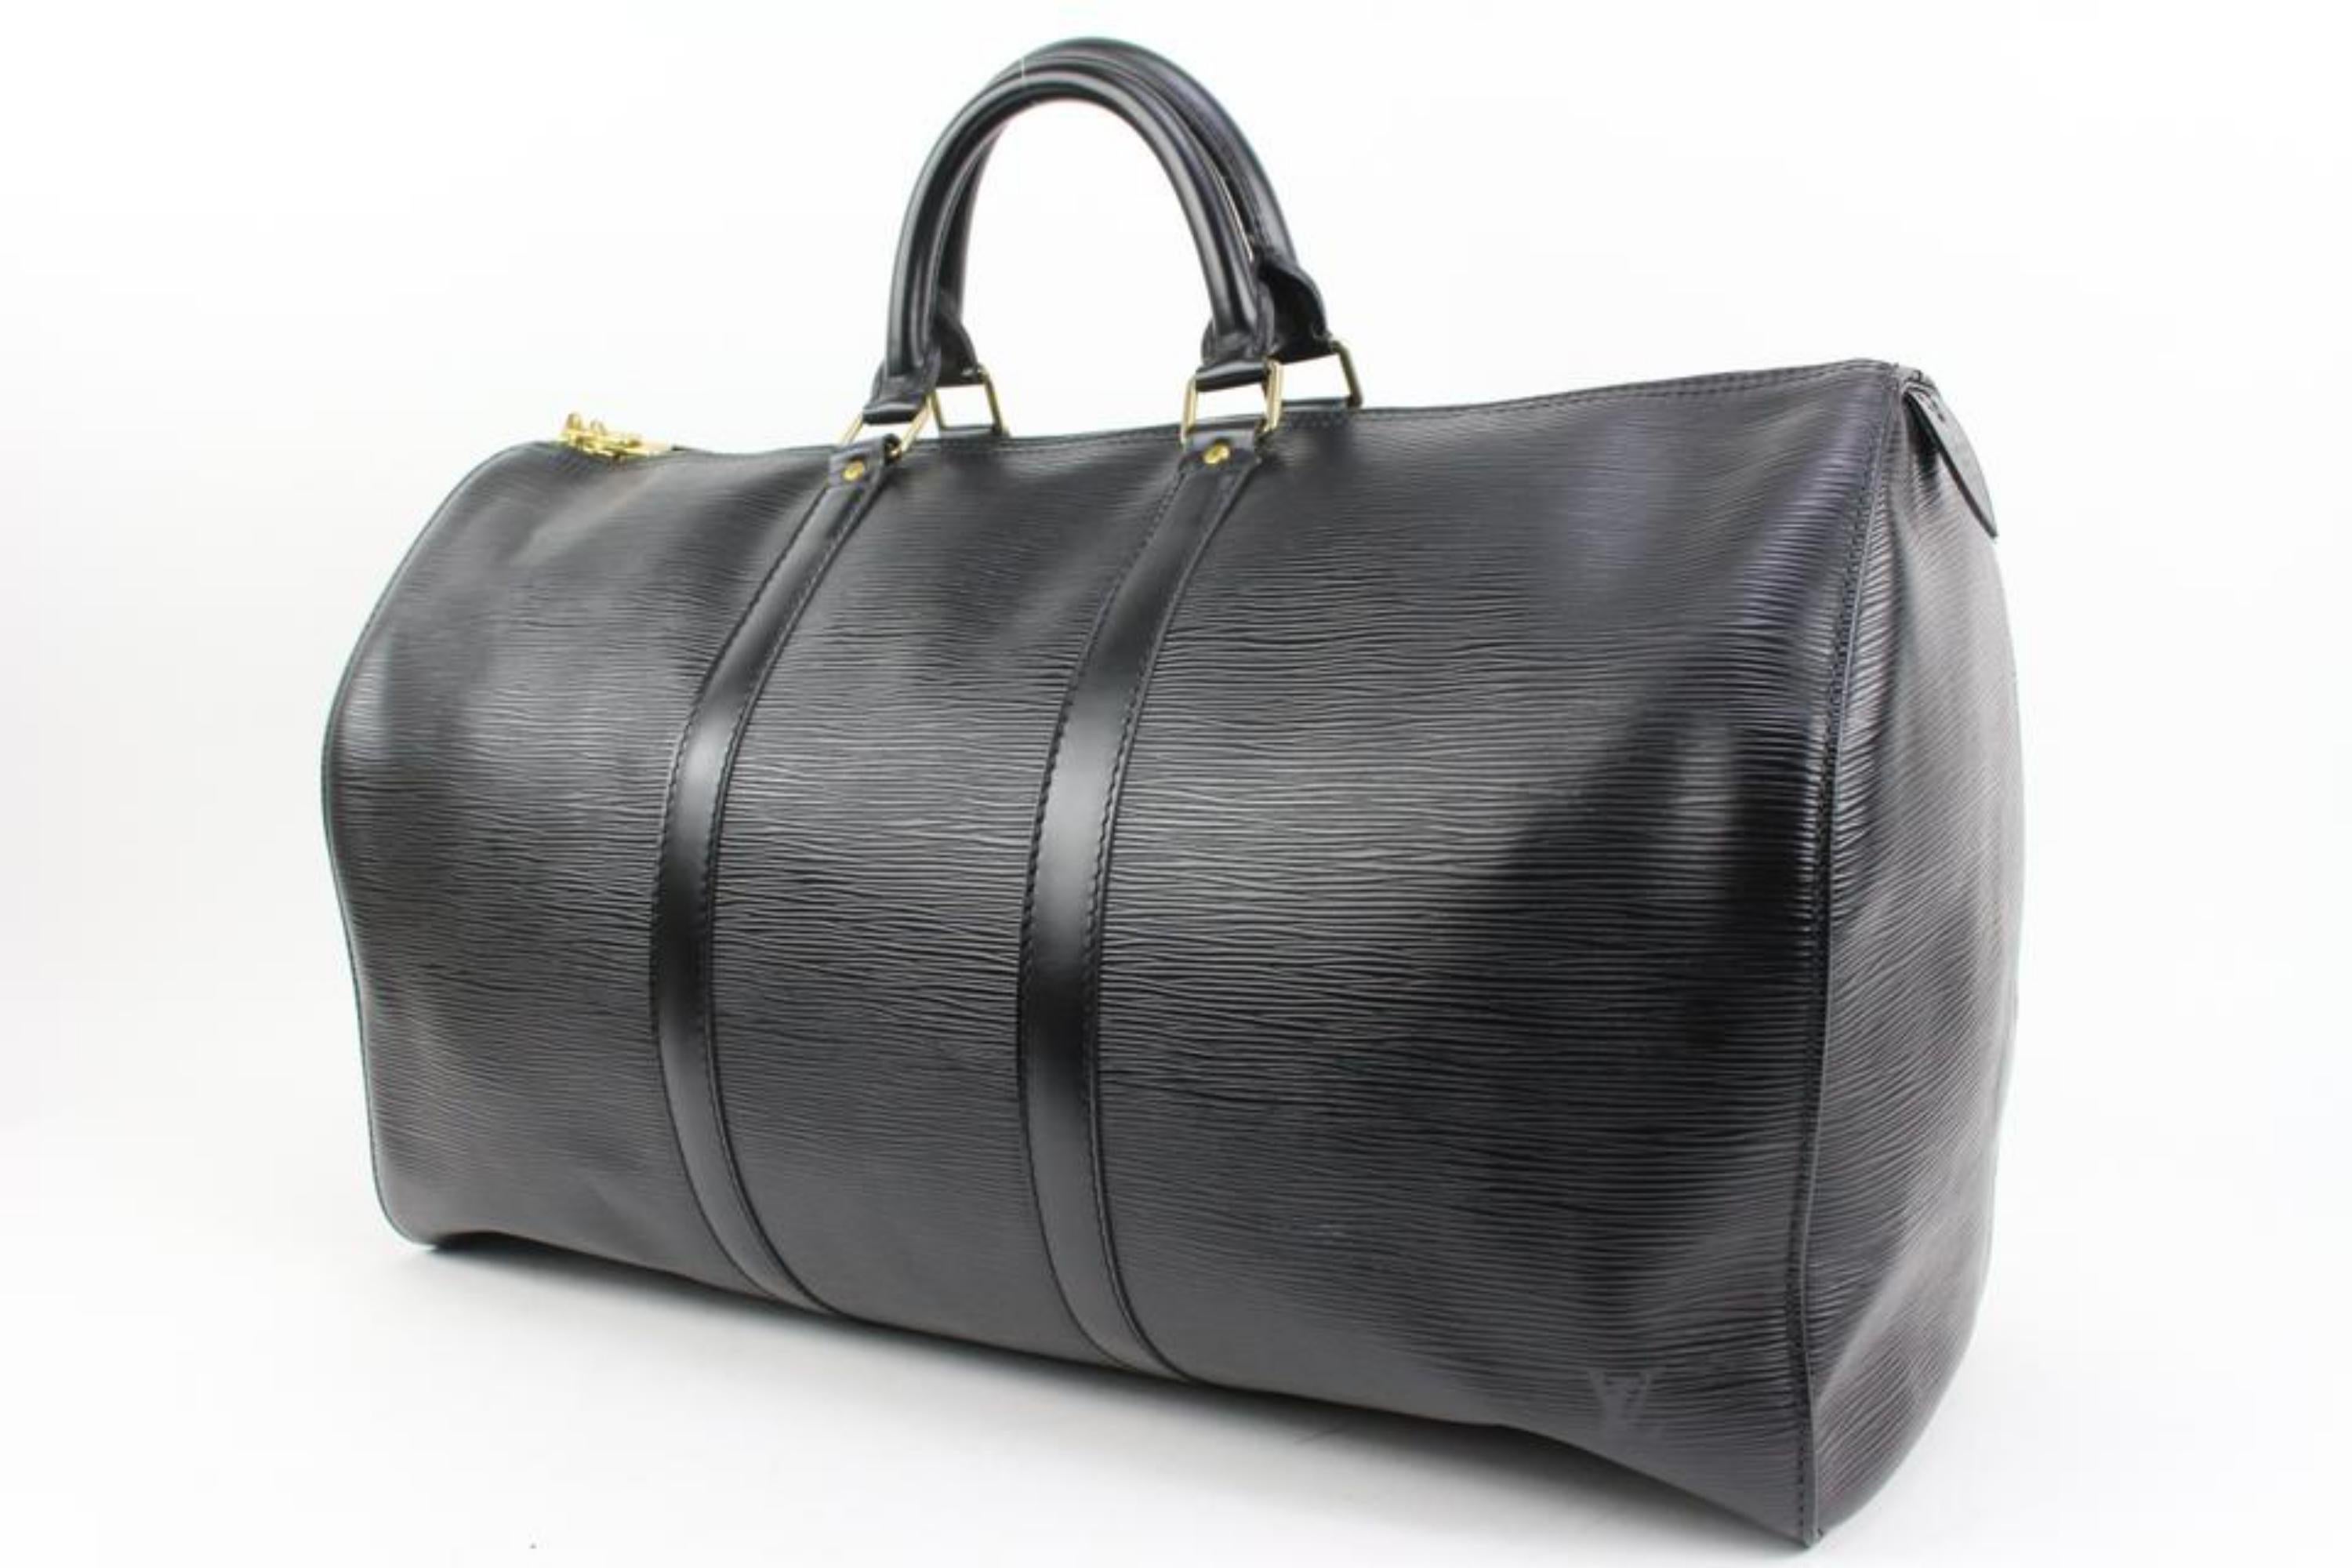 Louis Vuitton Black Epi Leather Noir Keepall 50 Duffle Bag  19lk321s
Date Code/Serial Number: VI0934
Made In: France
Measurements: Length:  20